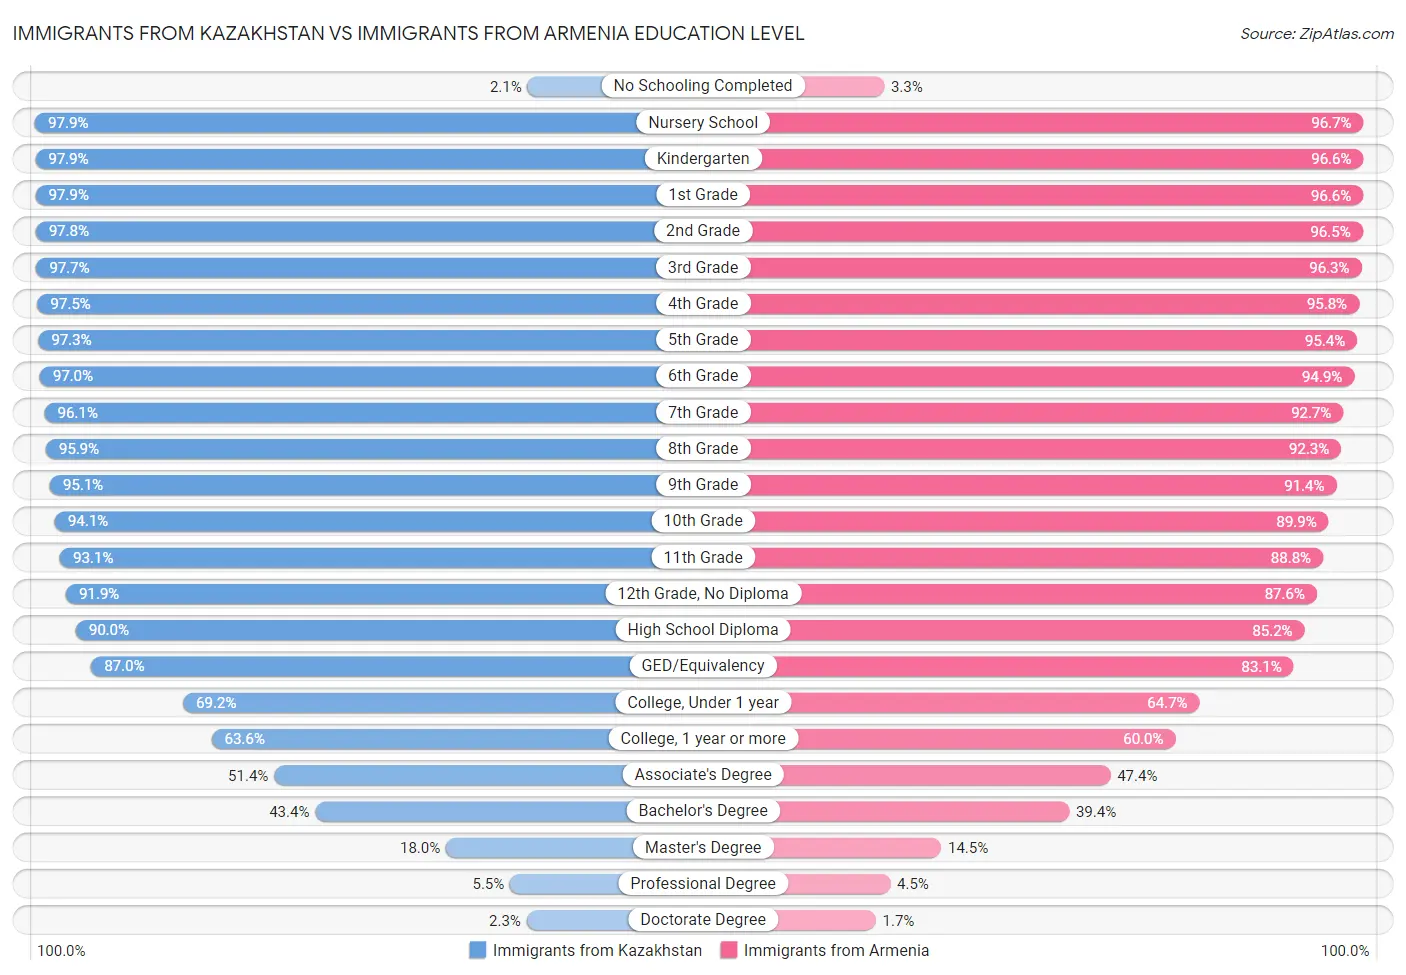 Immigrants from Kazakhstan vs Immigrants from Armenia Education Level